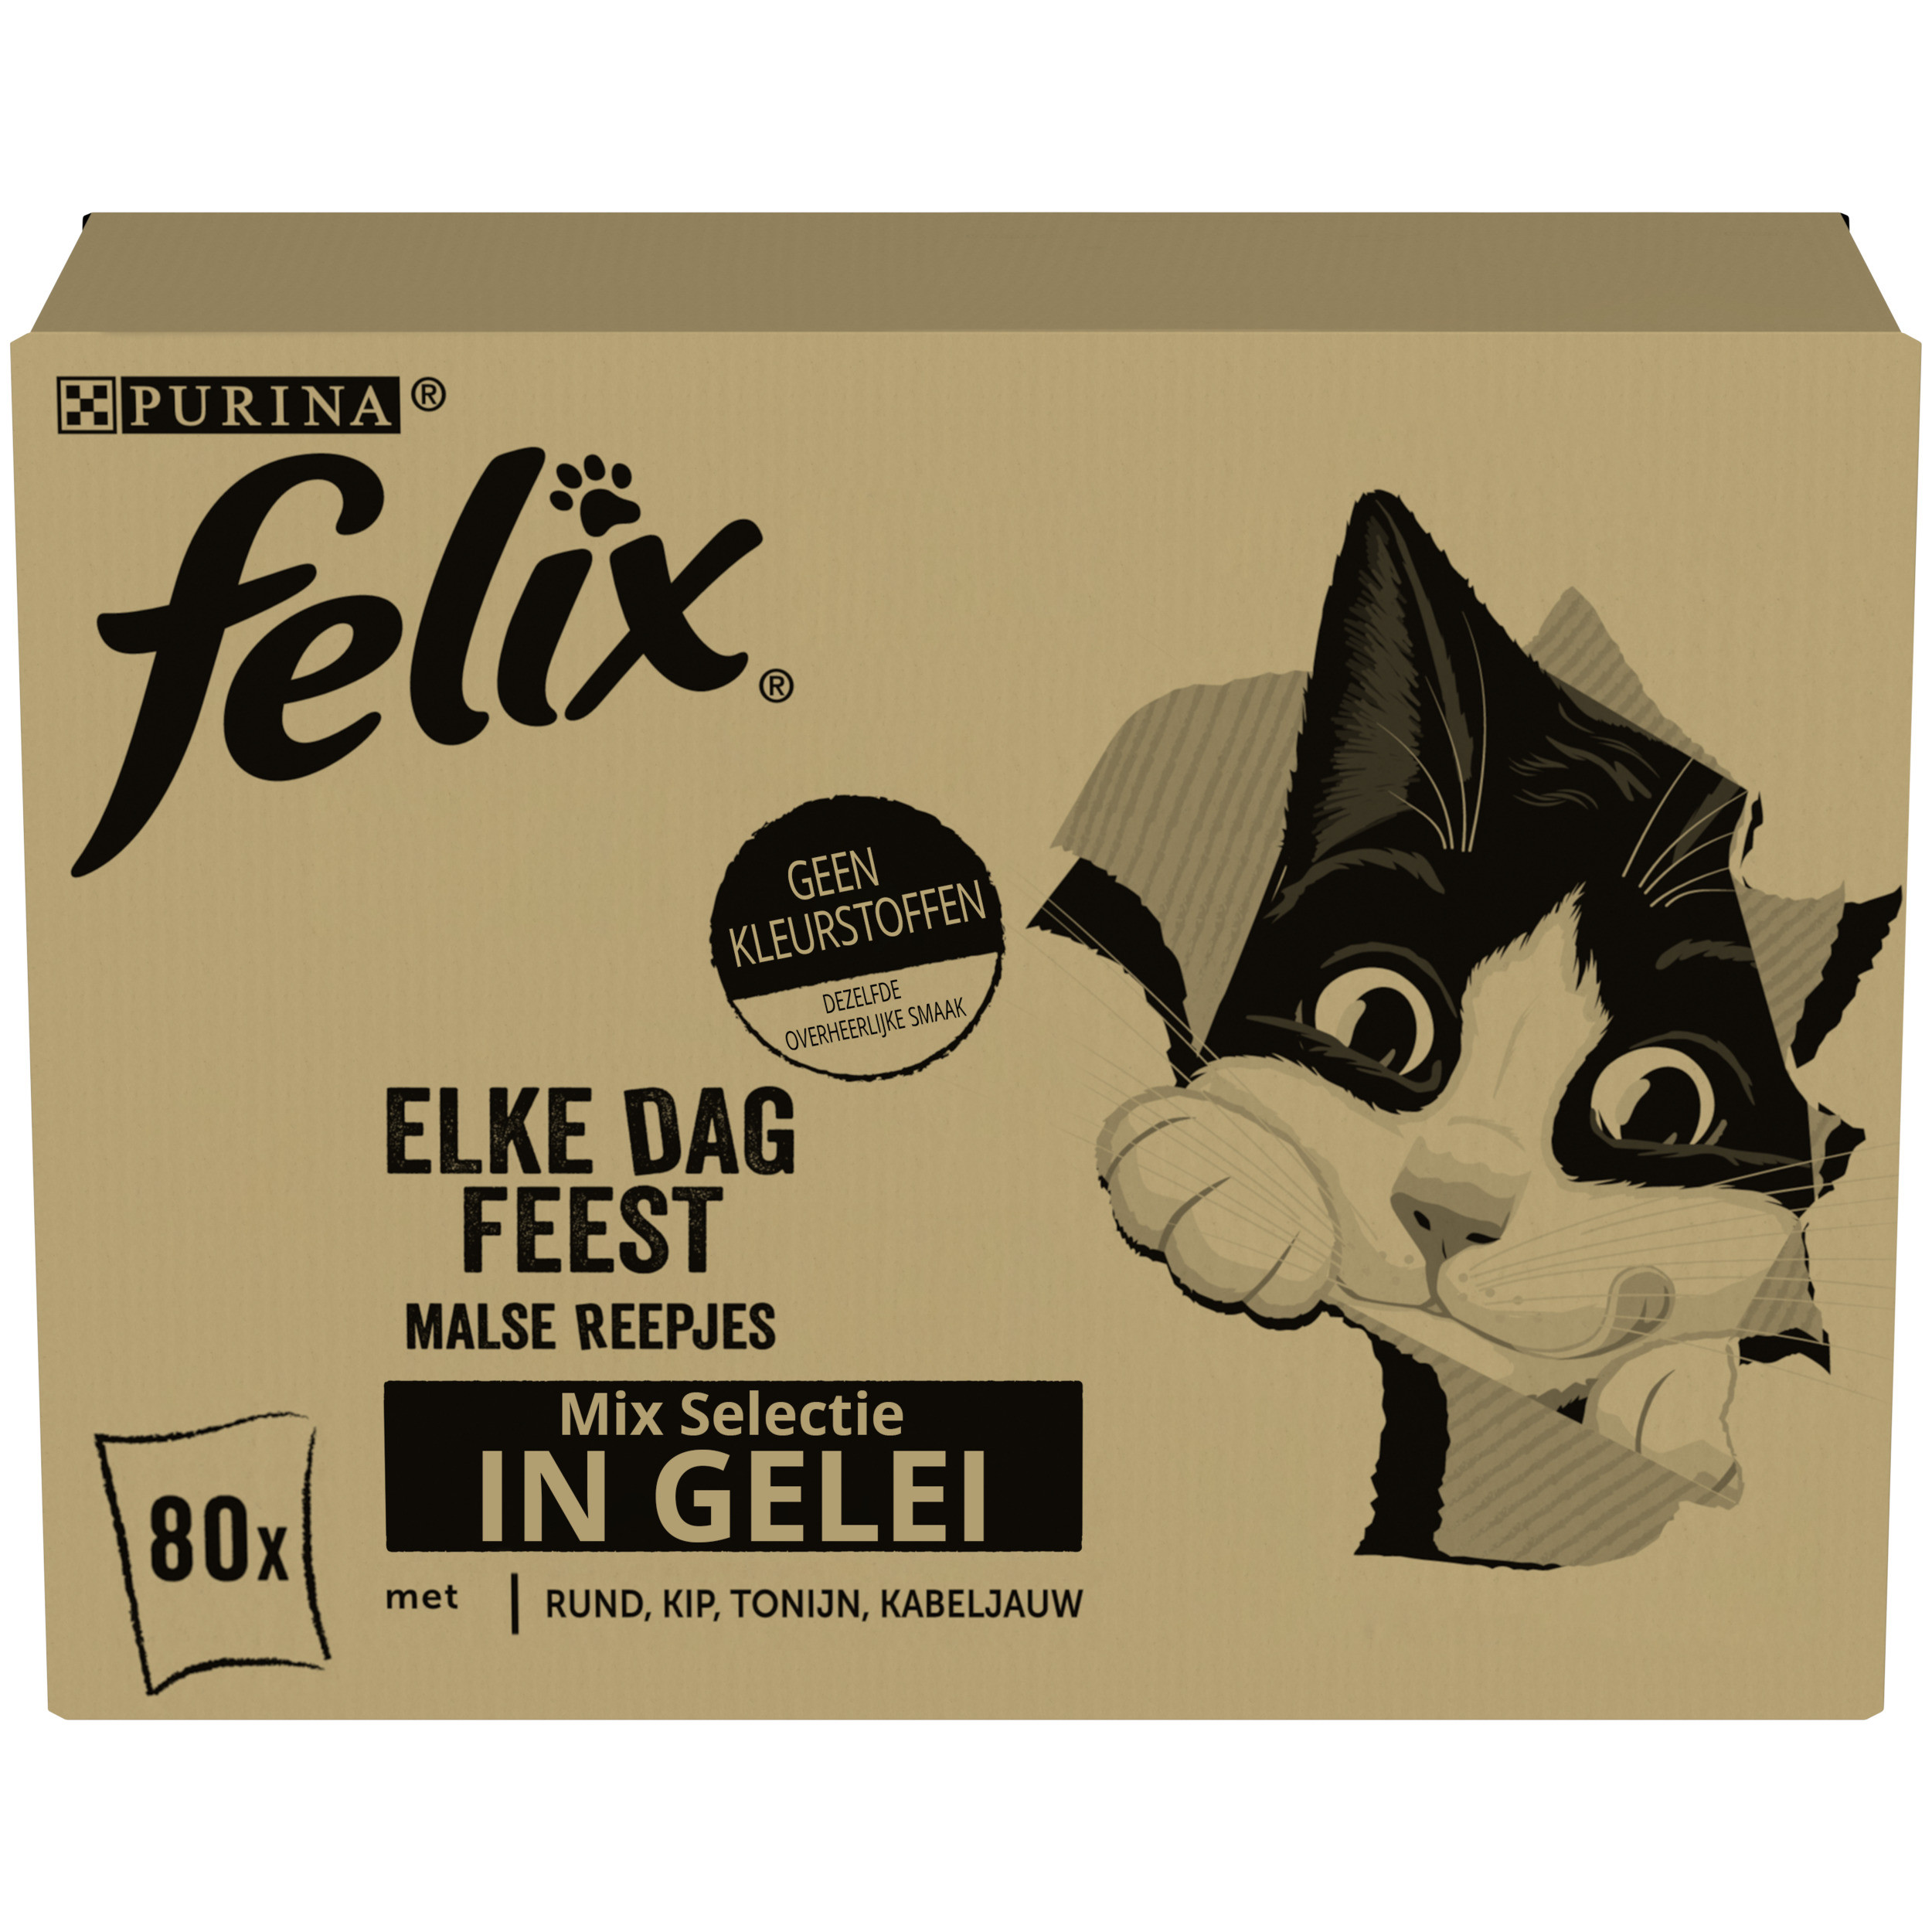 PURINA® FELIX Elke Dag Feest Mix Selectie in Gelei 80x85g